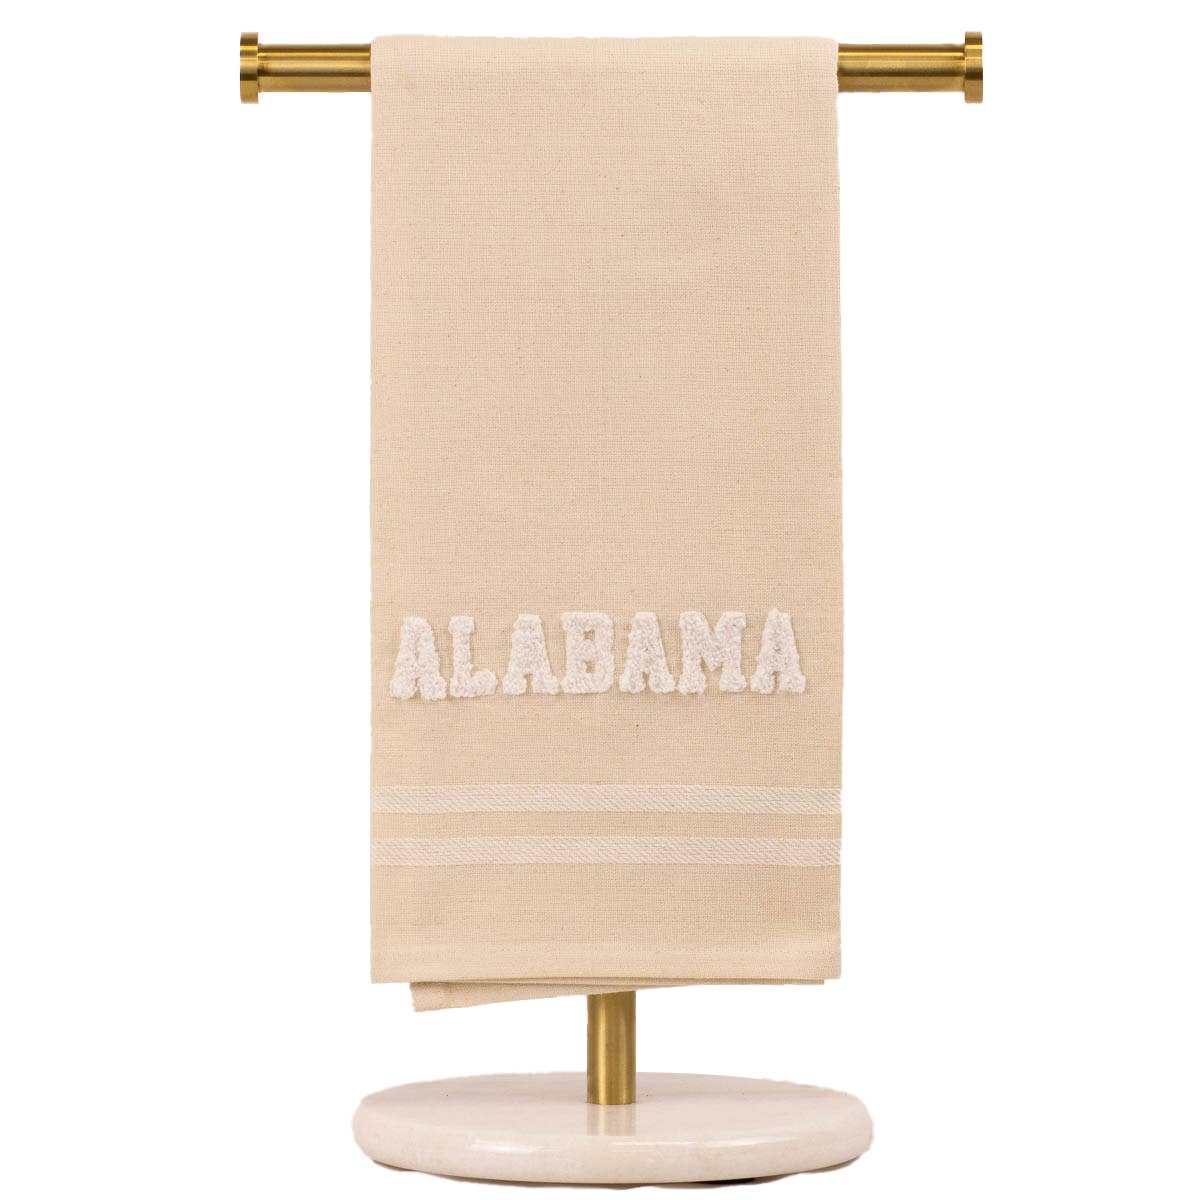 Alabama Embroidery Hand Towel   Oat/Soft White   20x28